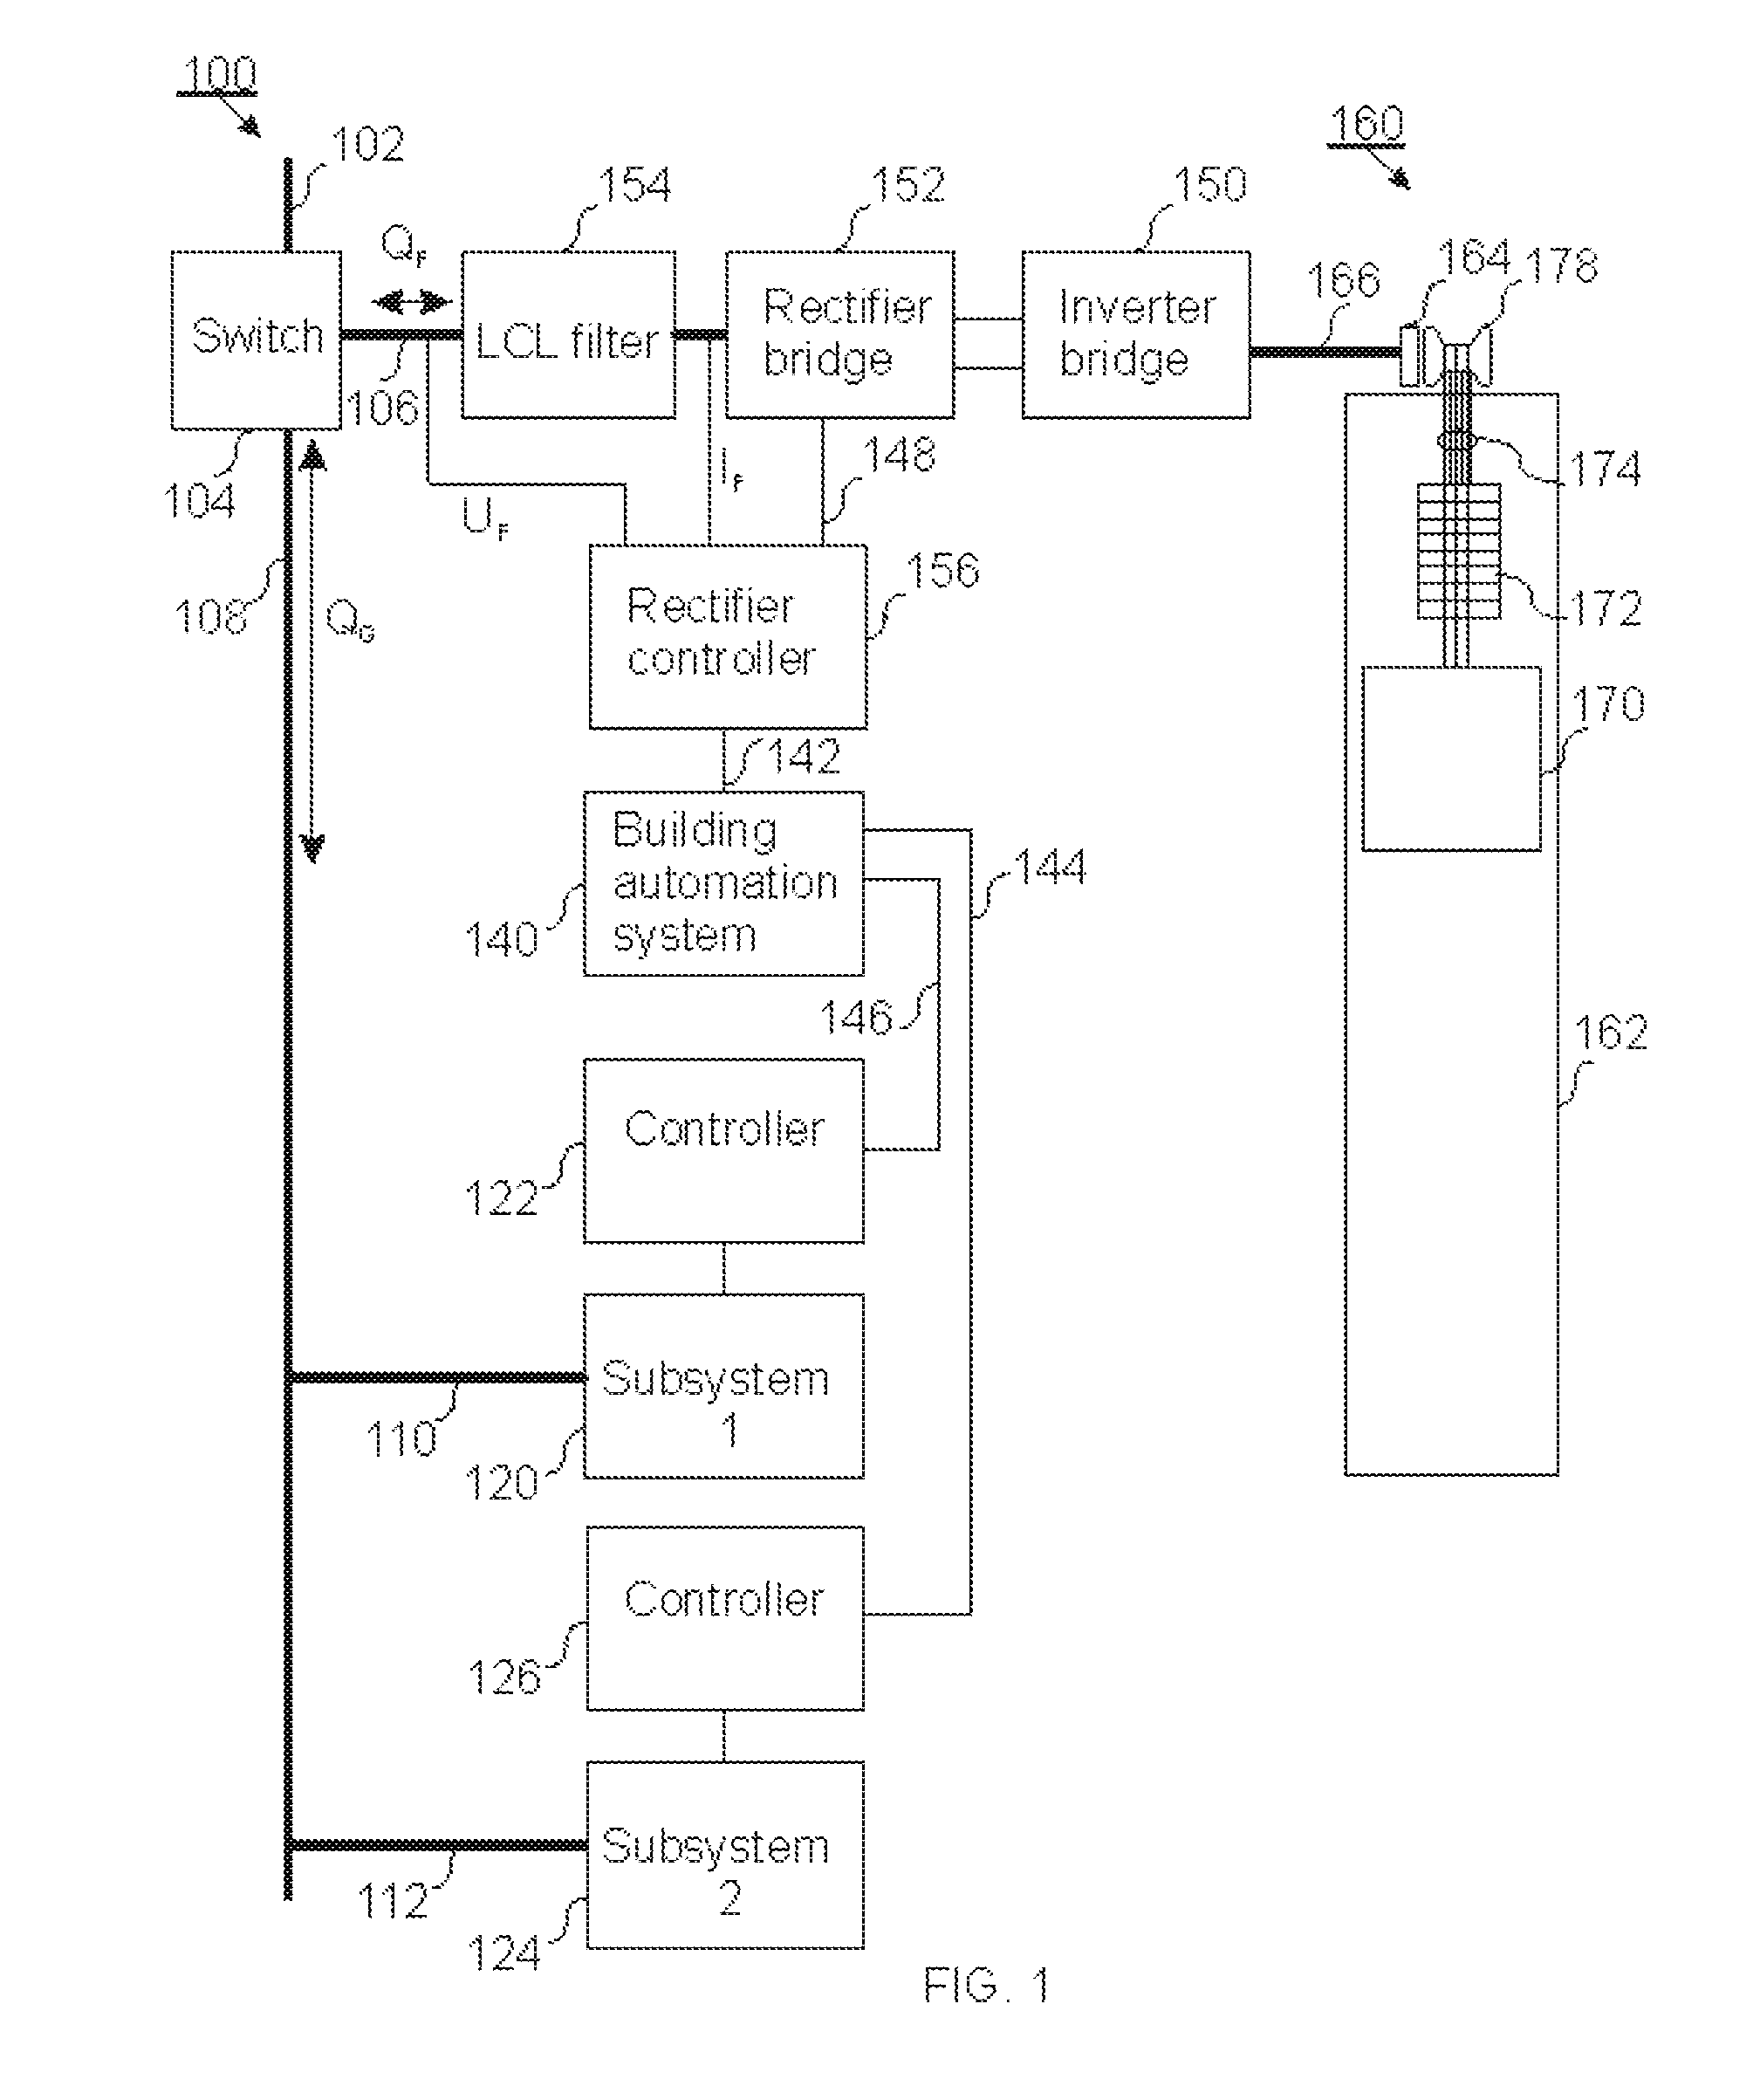 Elevator line bridge filter for compensating reactive power in a grid